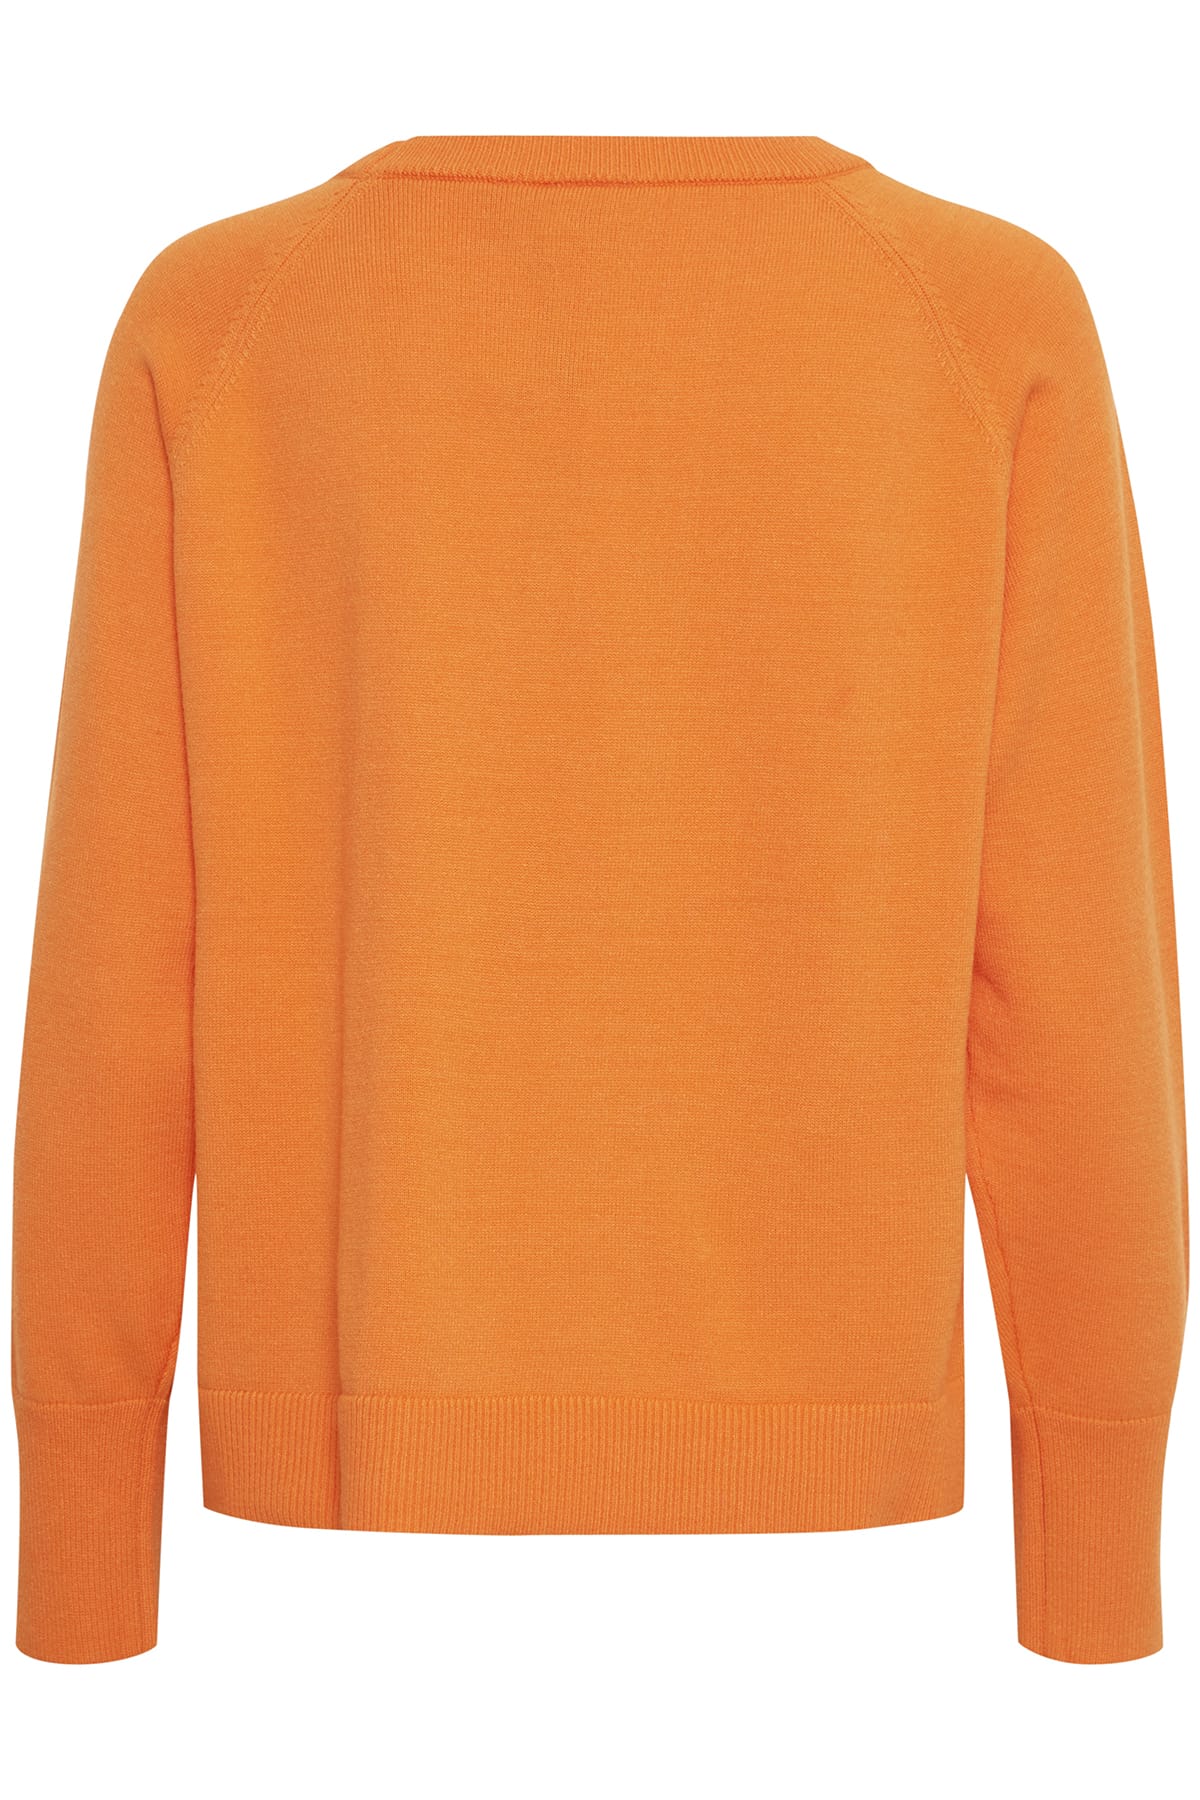 Sweatshirt IHBOSTON LS Persimmon Orange Sweatshirt ICHI 